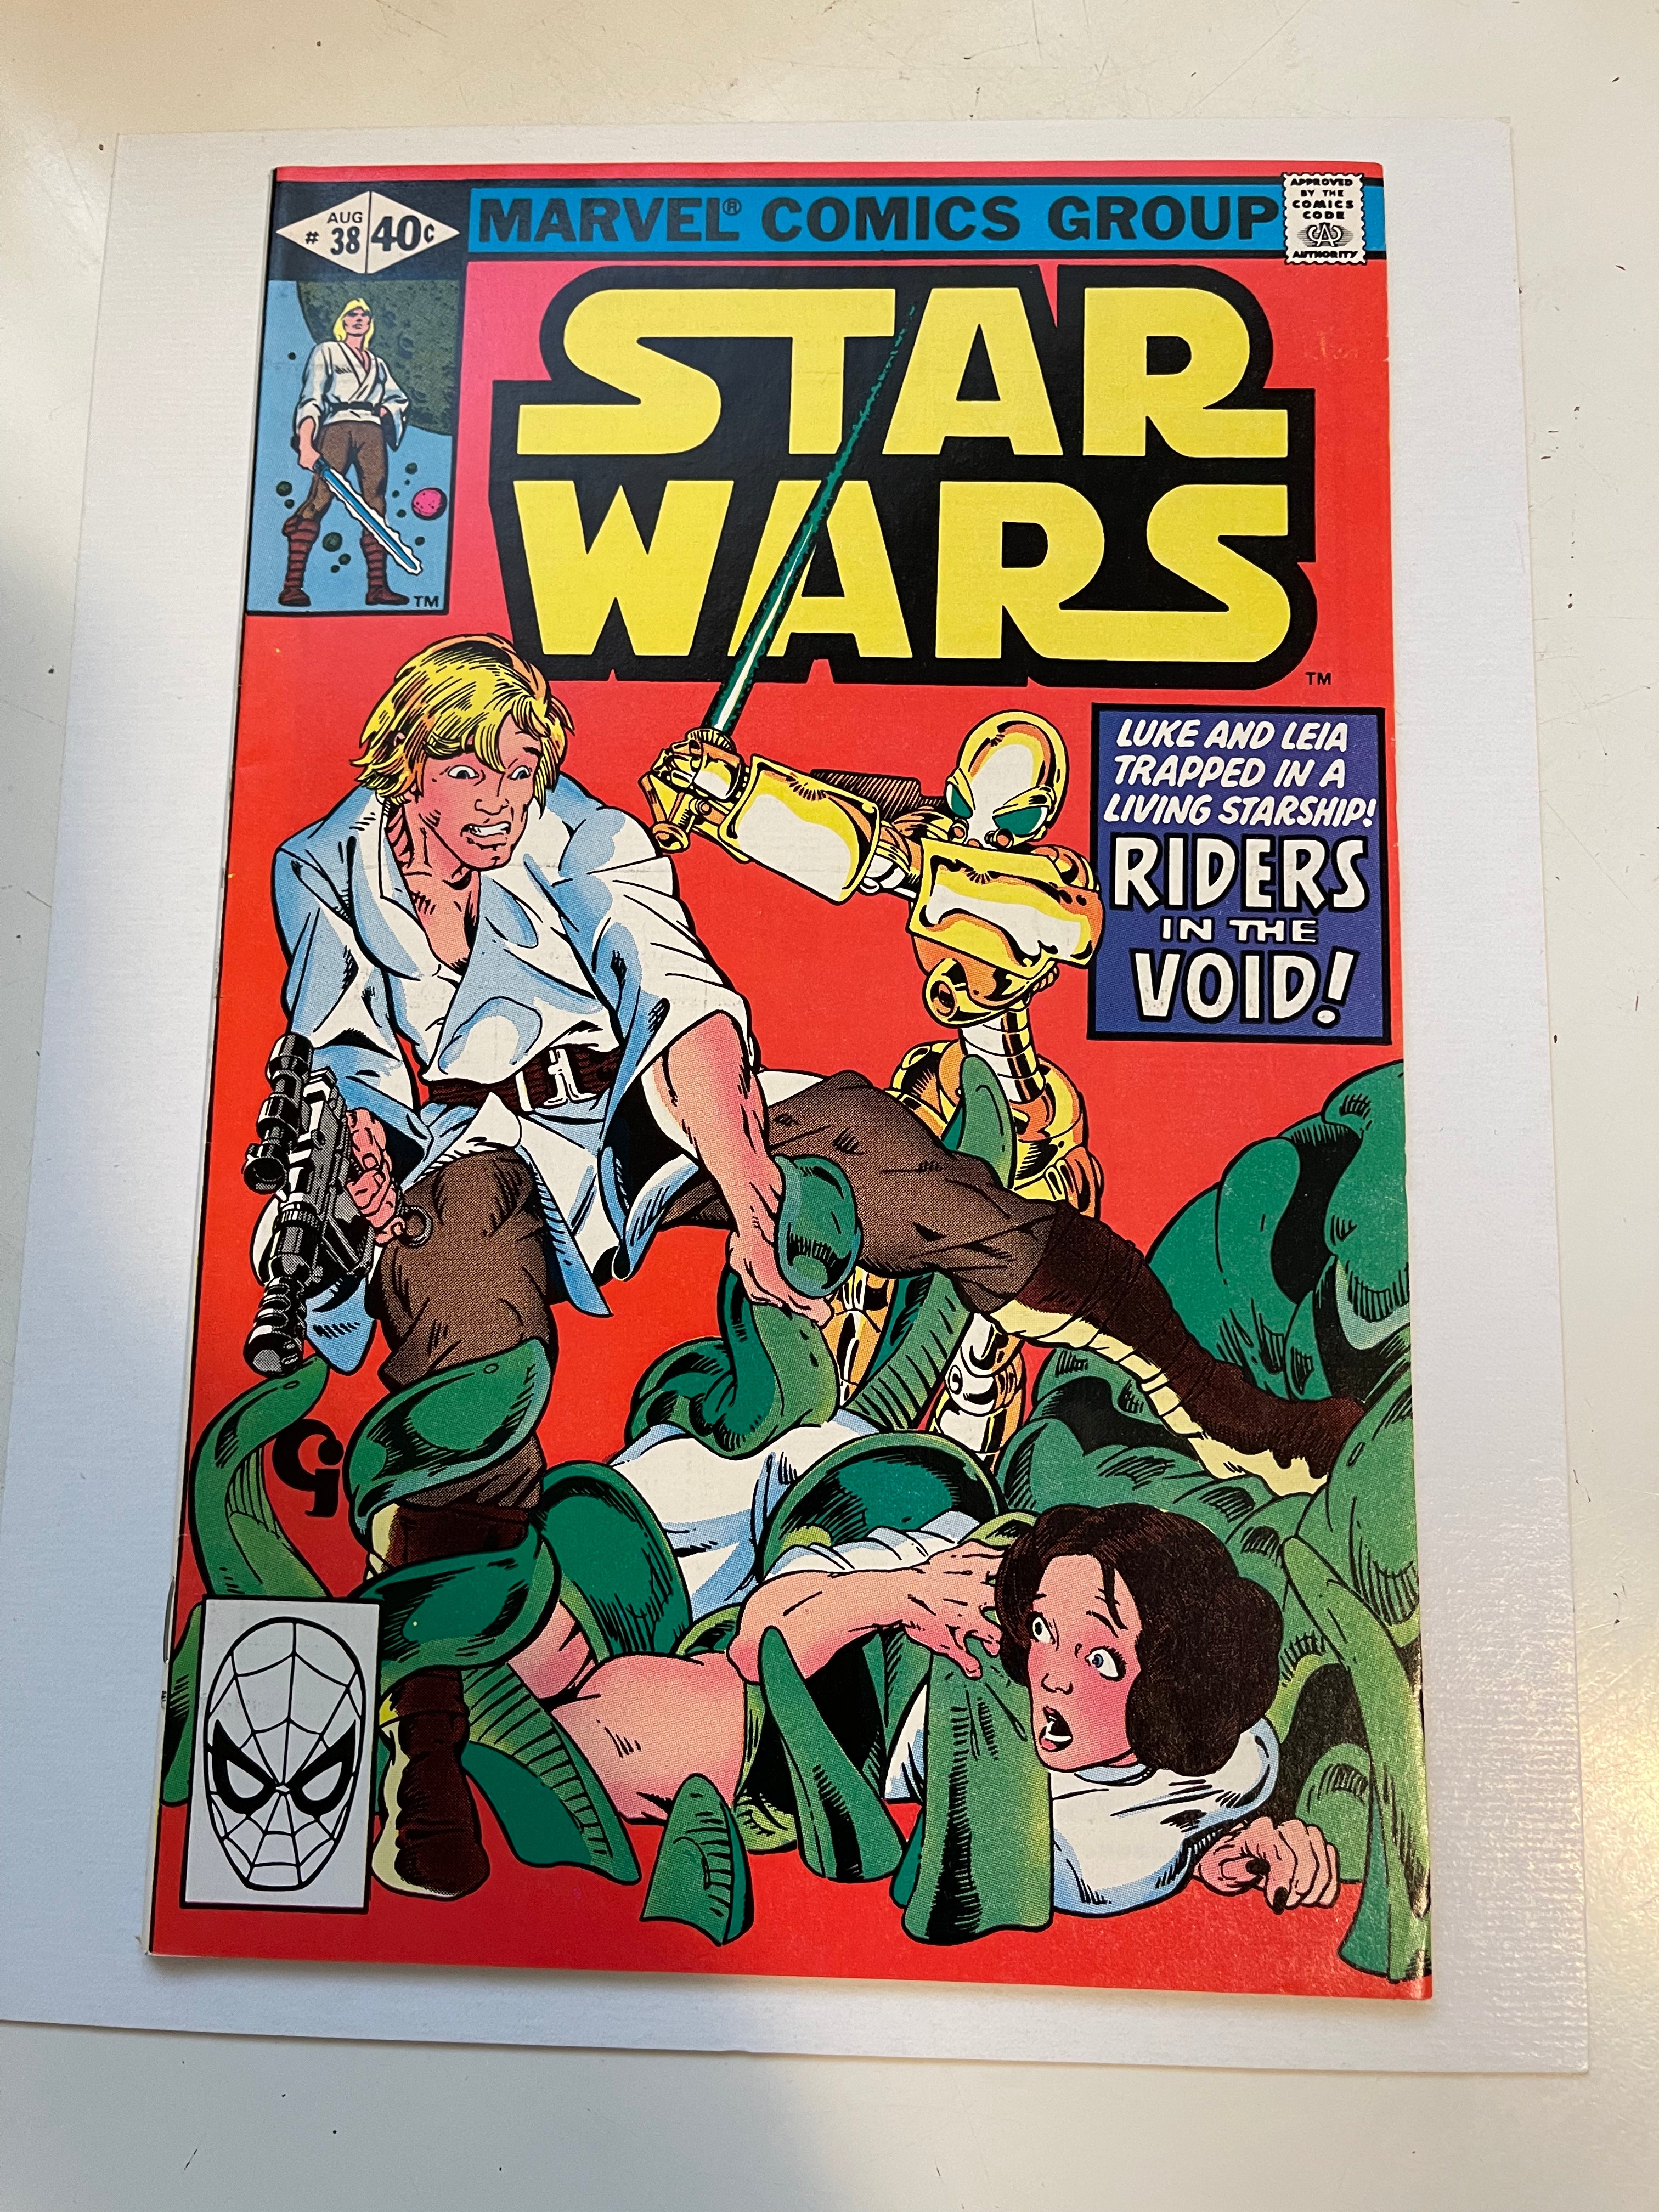 Star Wars #38 high grade condition comic book 1970s